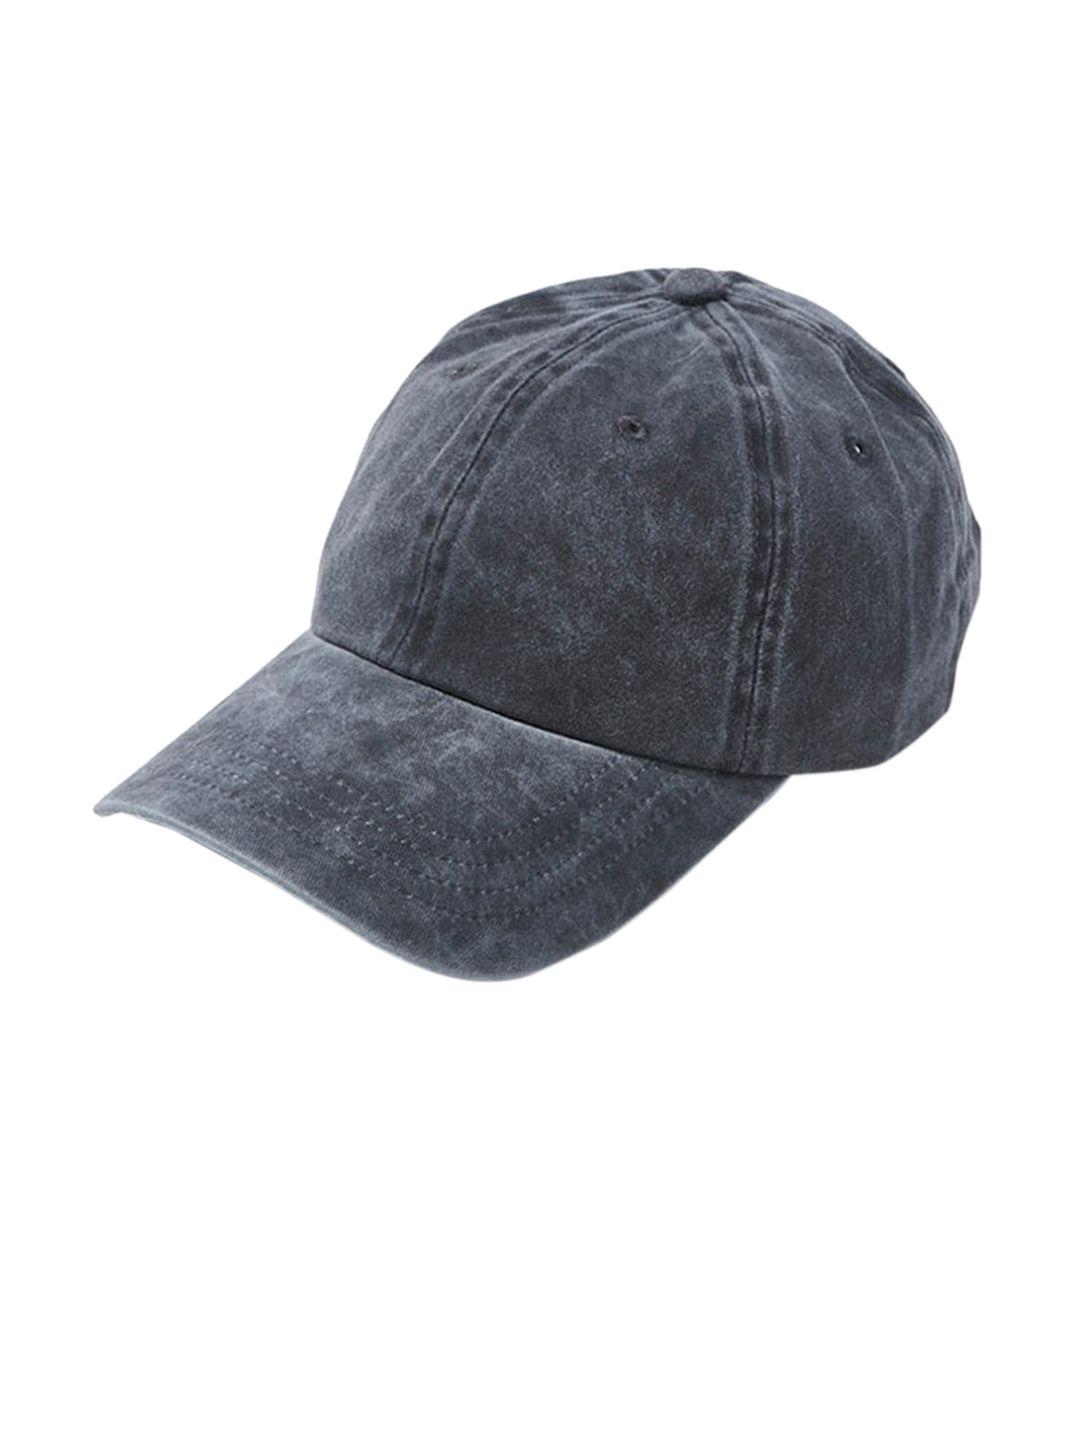 forever-21-men-charcoal-grey-stone-wash-baseball-cap